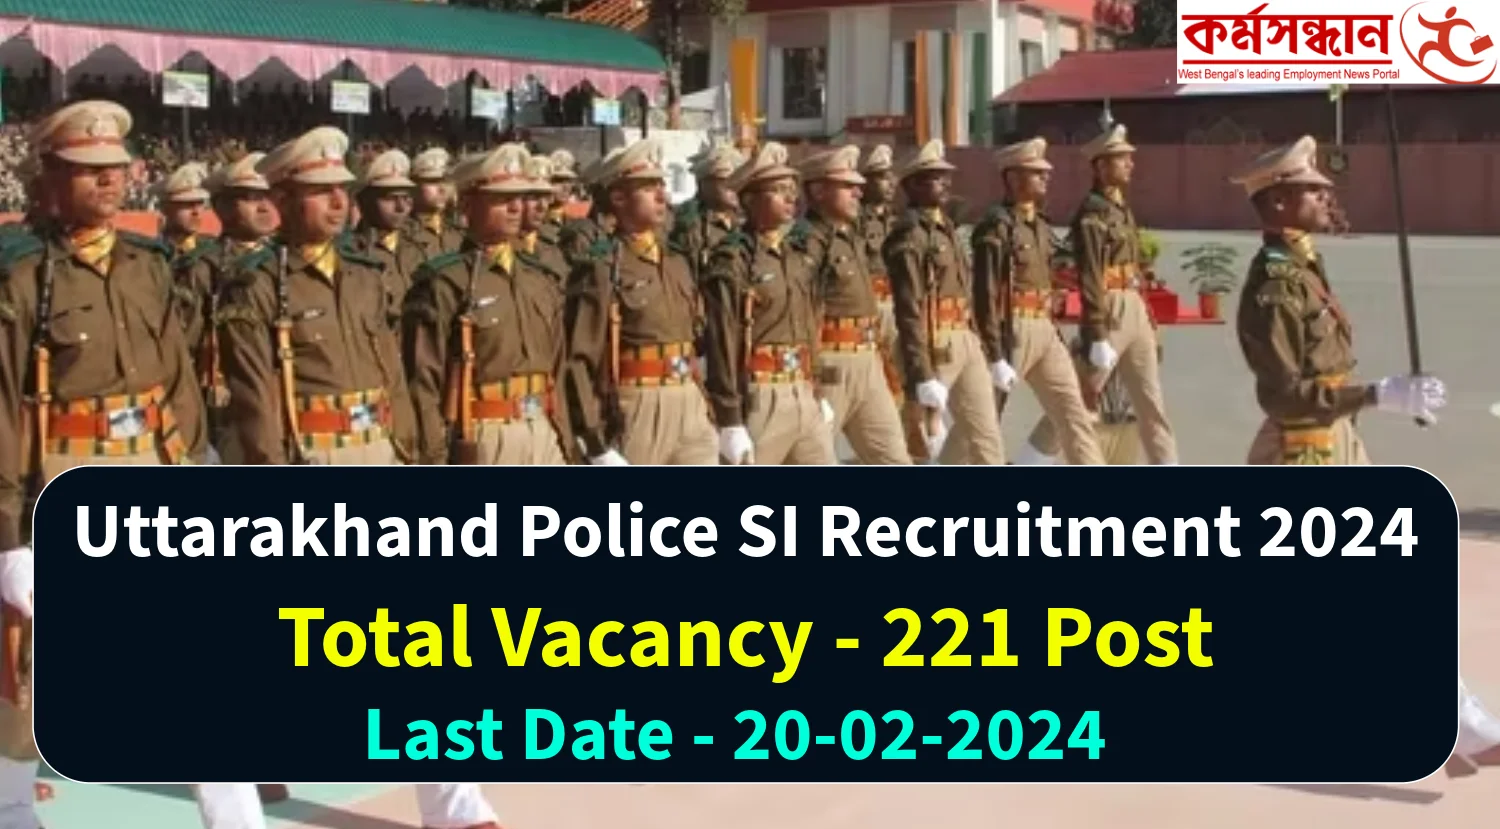 Uttarakhand Police SI Recruitment 2024 for 221 Vacancies